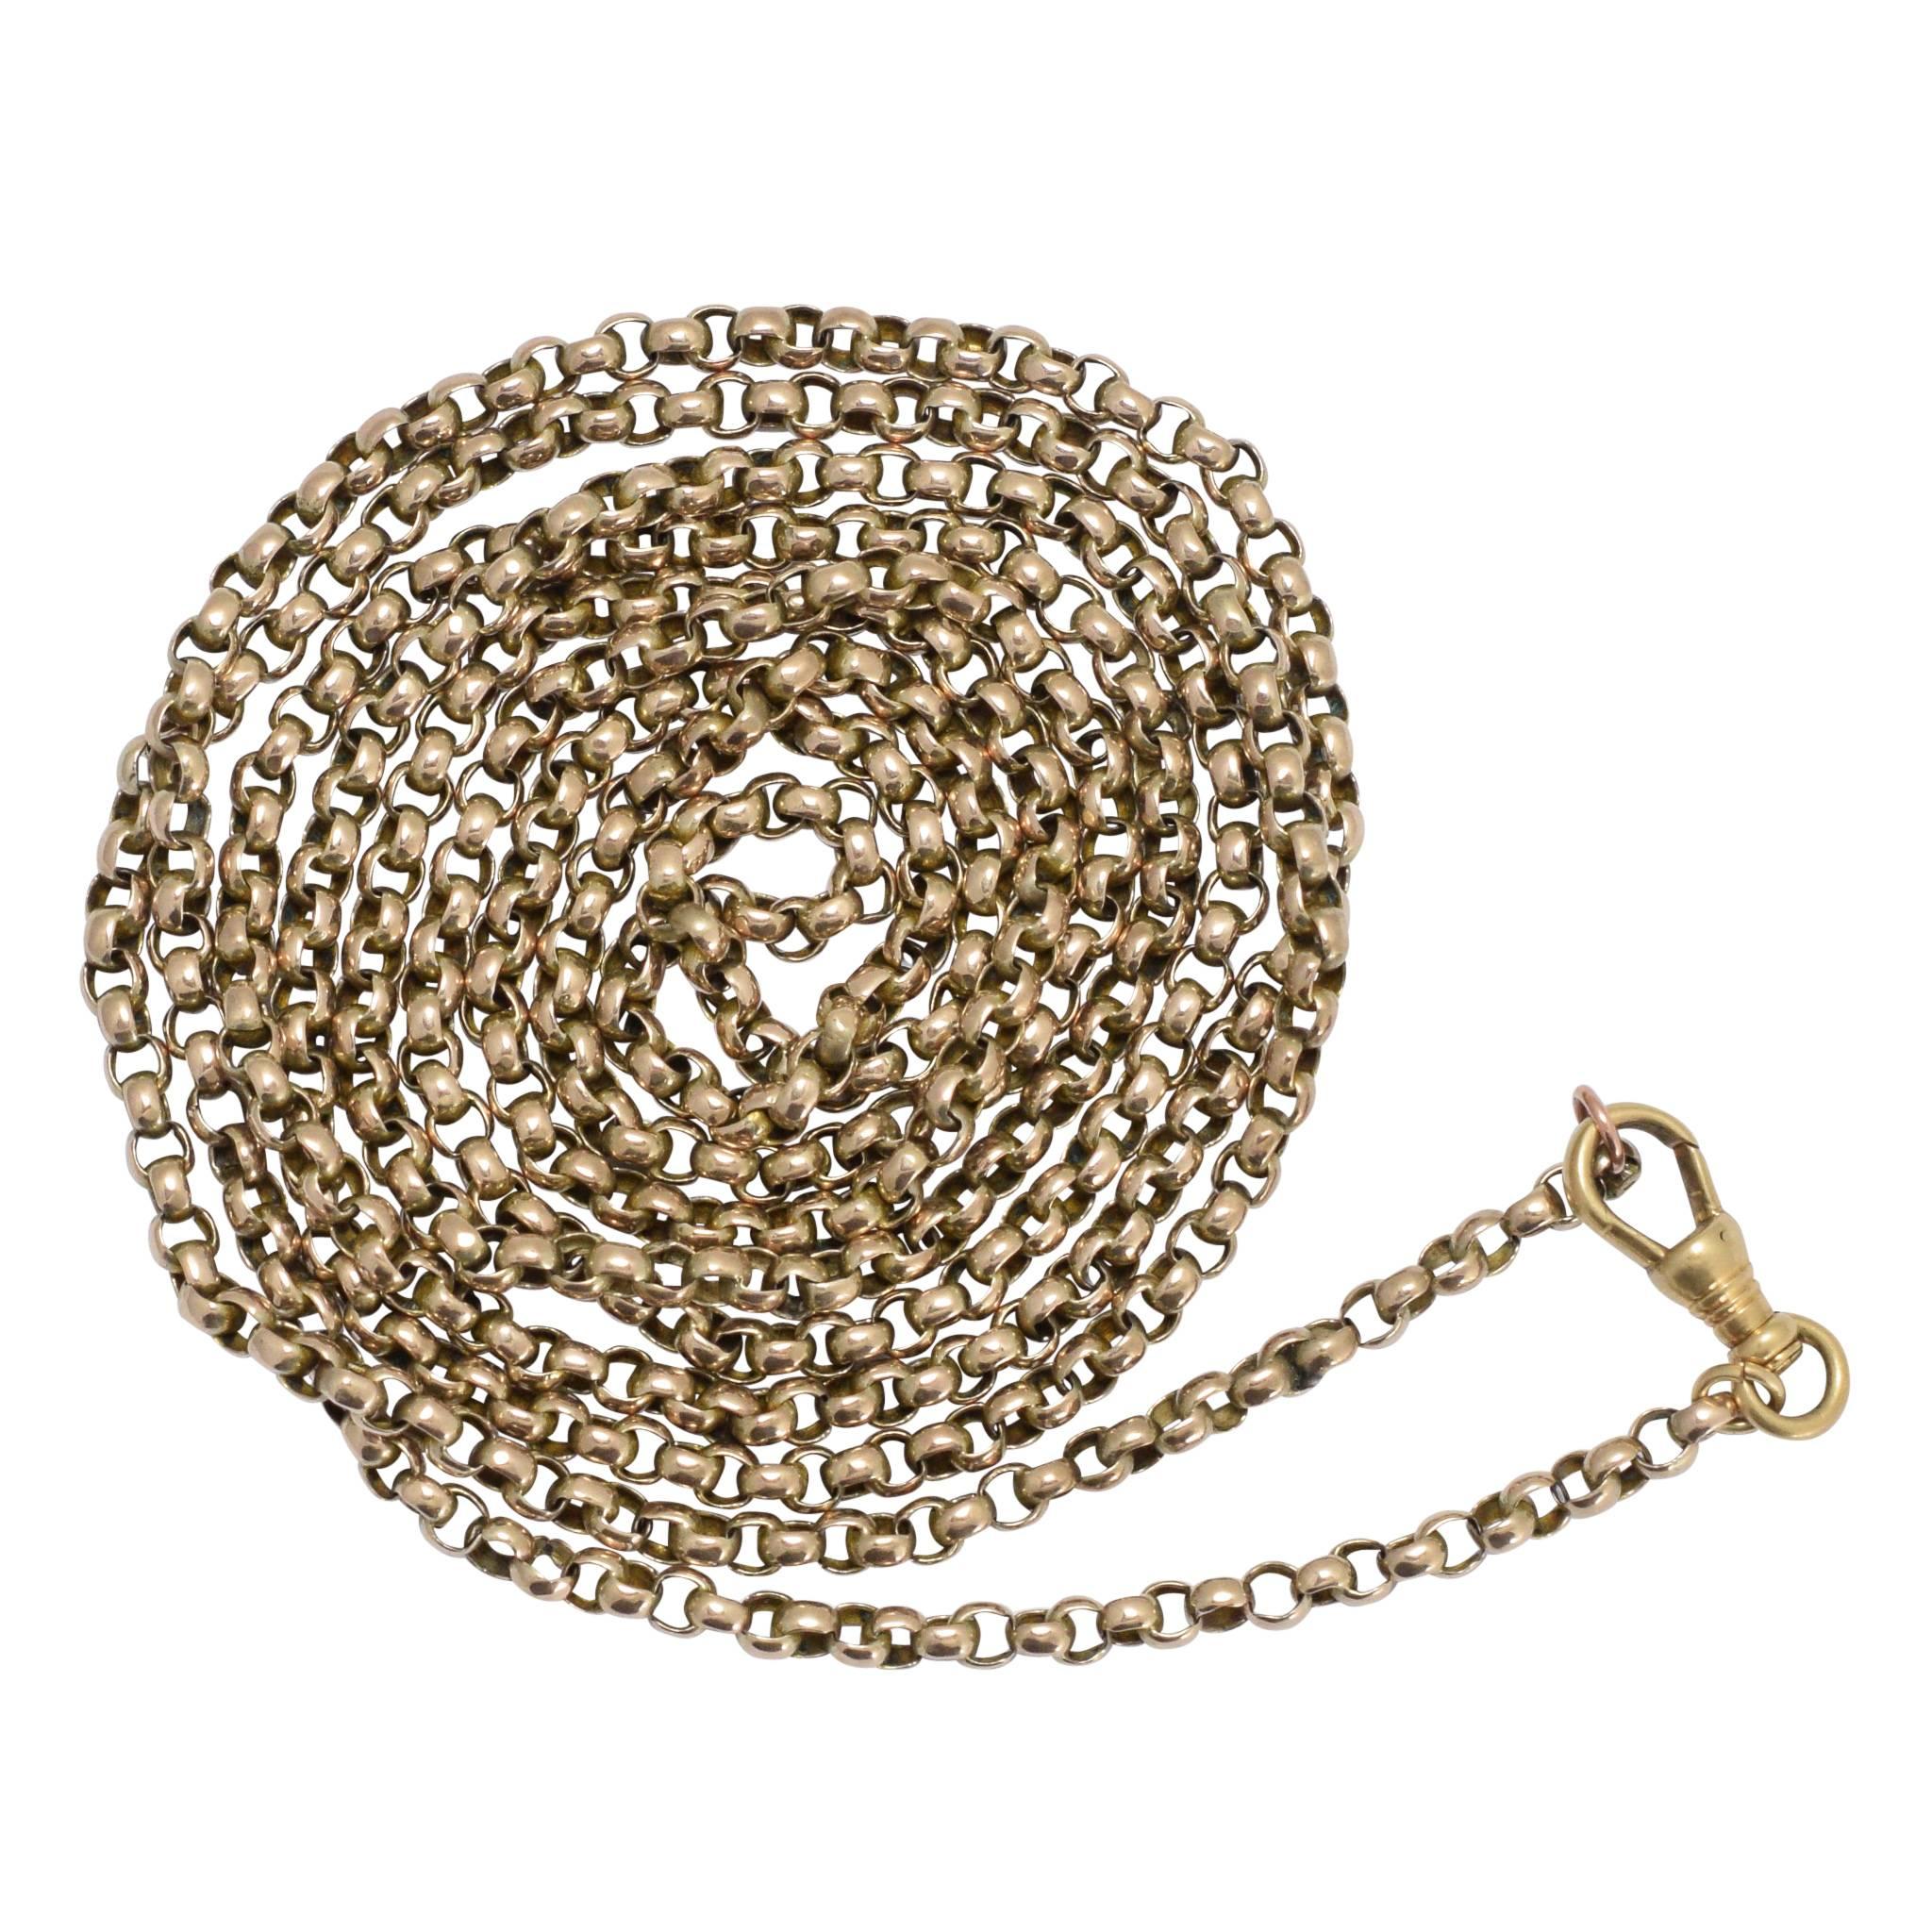 Antique Victorian 9 Karat Gold Guard Chain